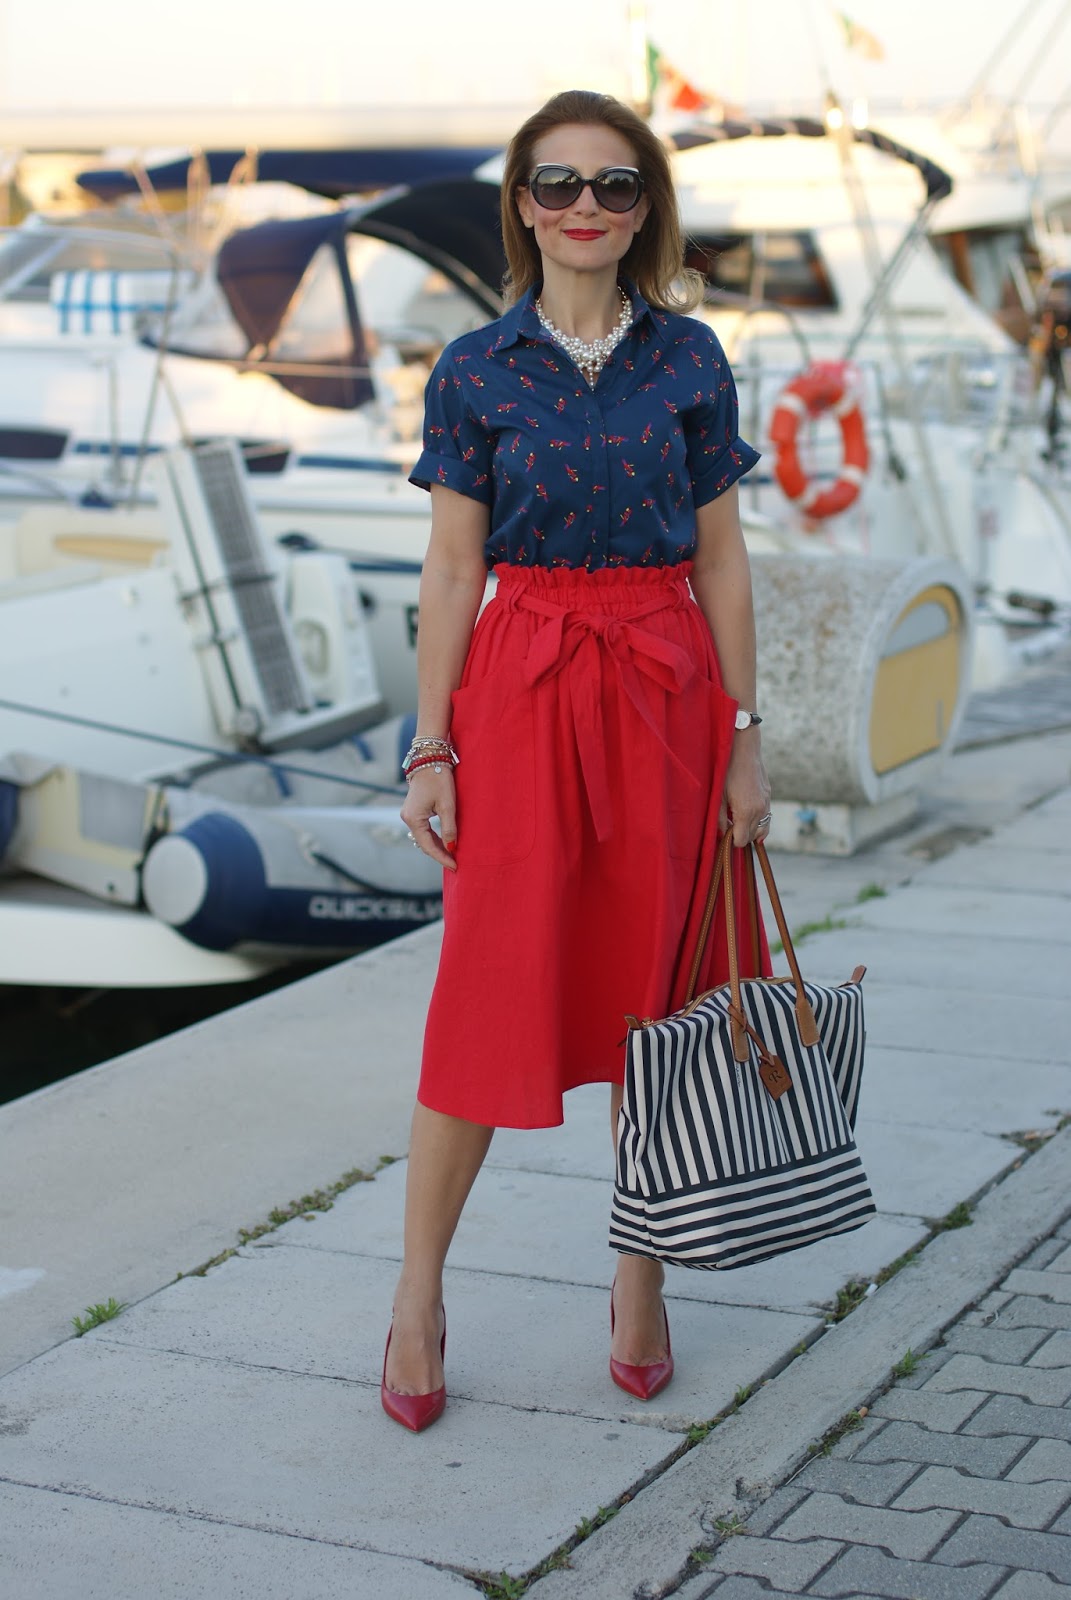 Roberta Pieri: Robertina bag for my summer holiday style | Fashion and ...